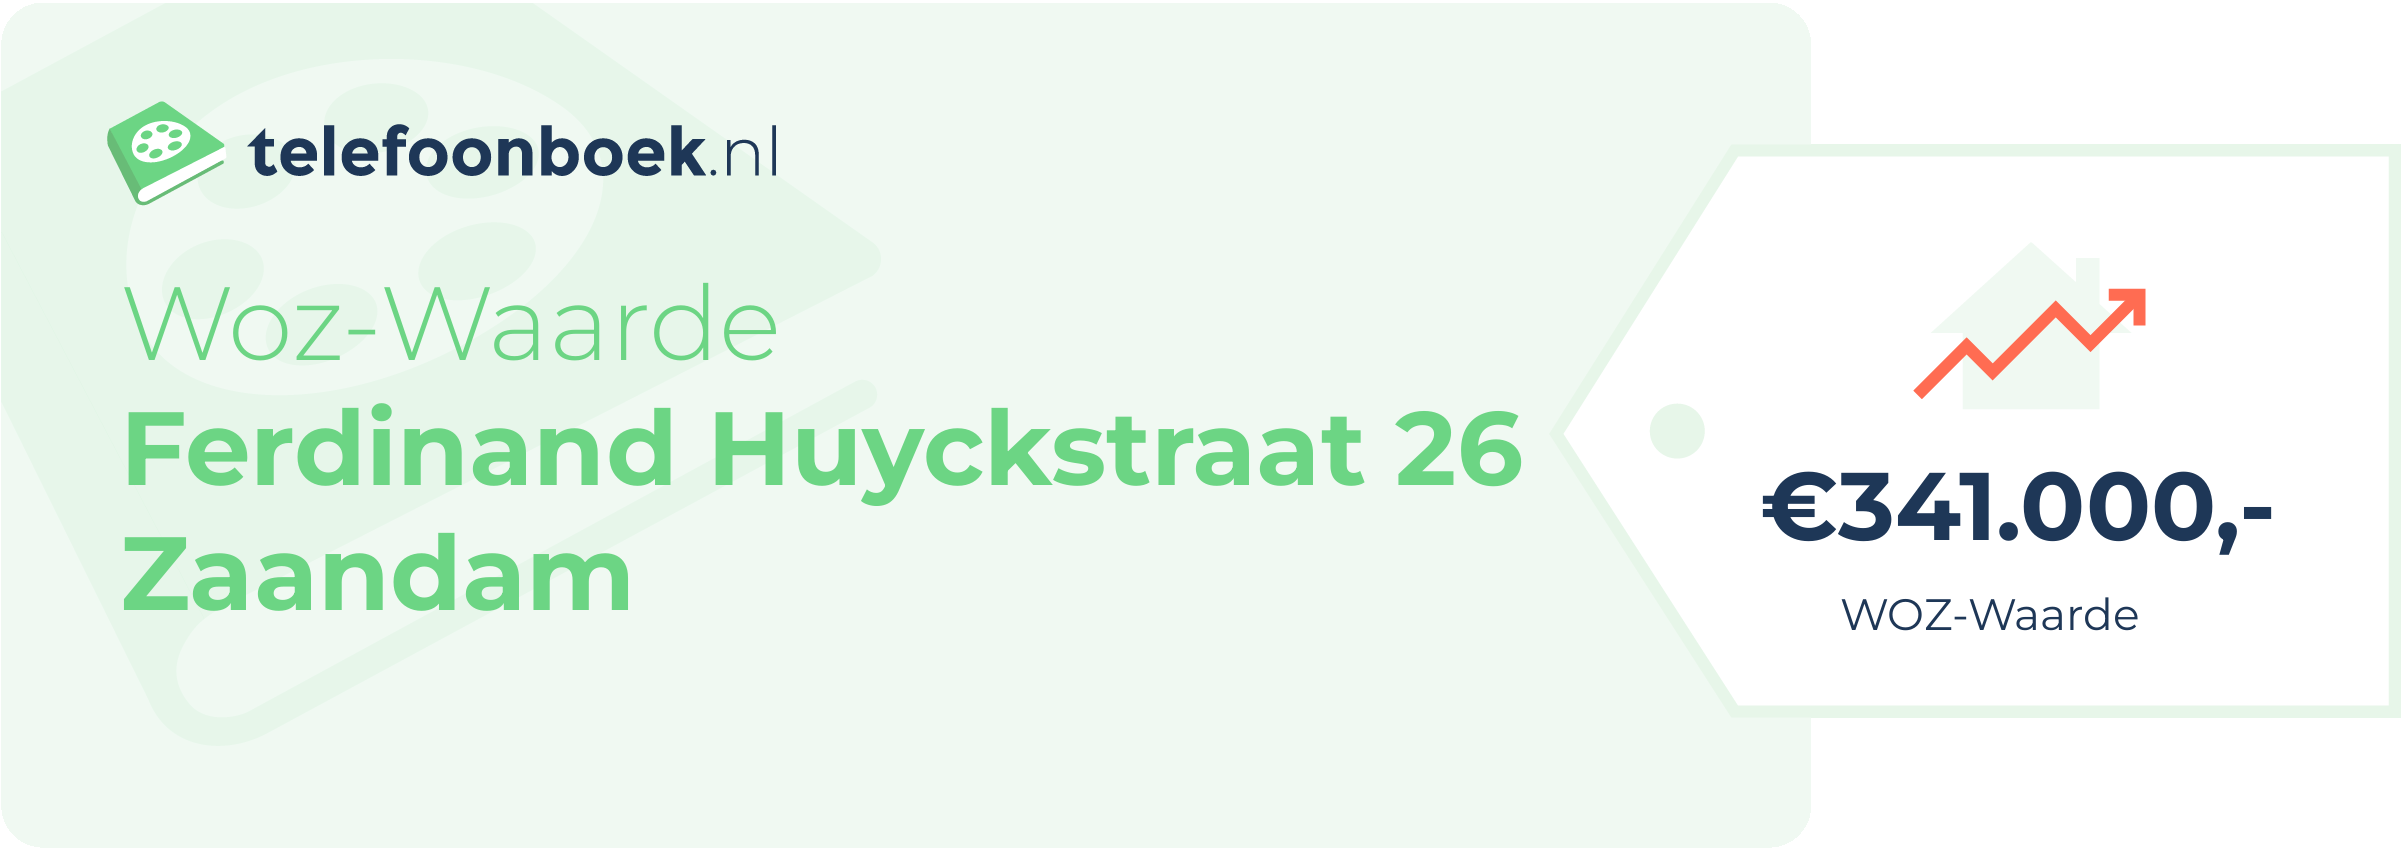 WOZ-waarde Ferdinand Huyckstraat 26 Zaandam